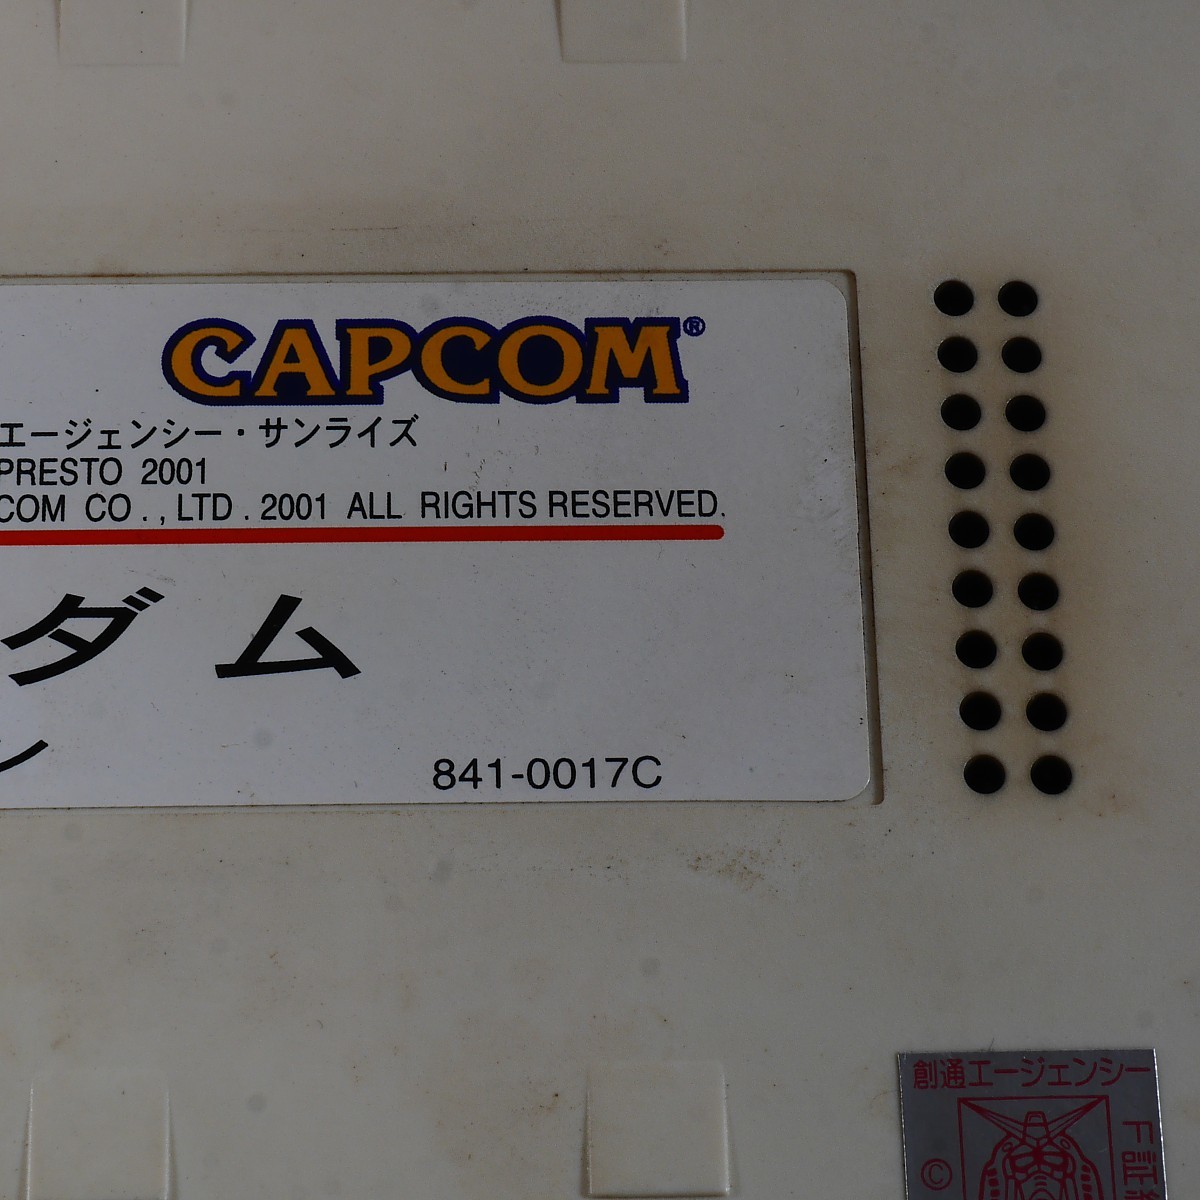 SEGA NAOMI Mobile Suit Gundam ream .vsji on ROM operation verification ending 